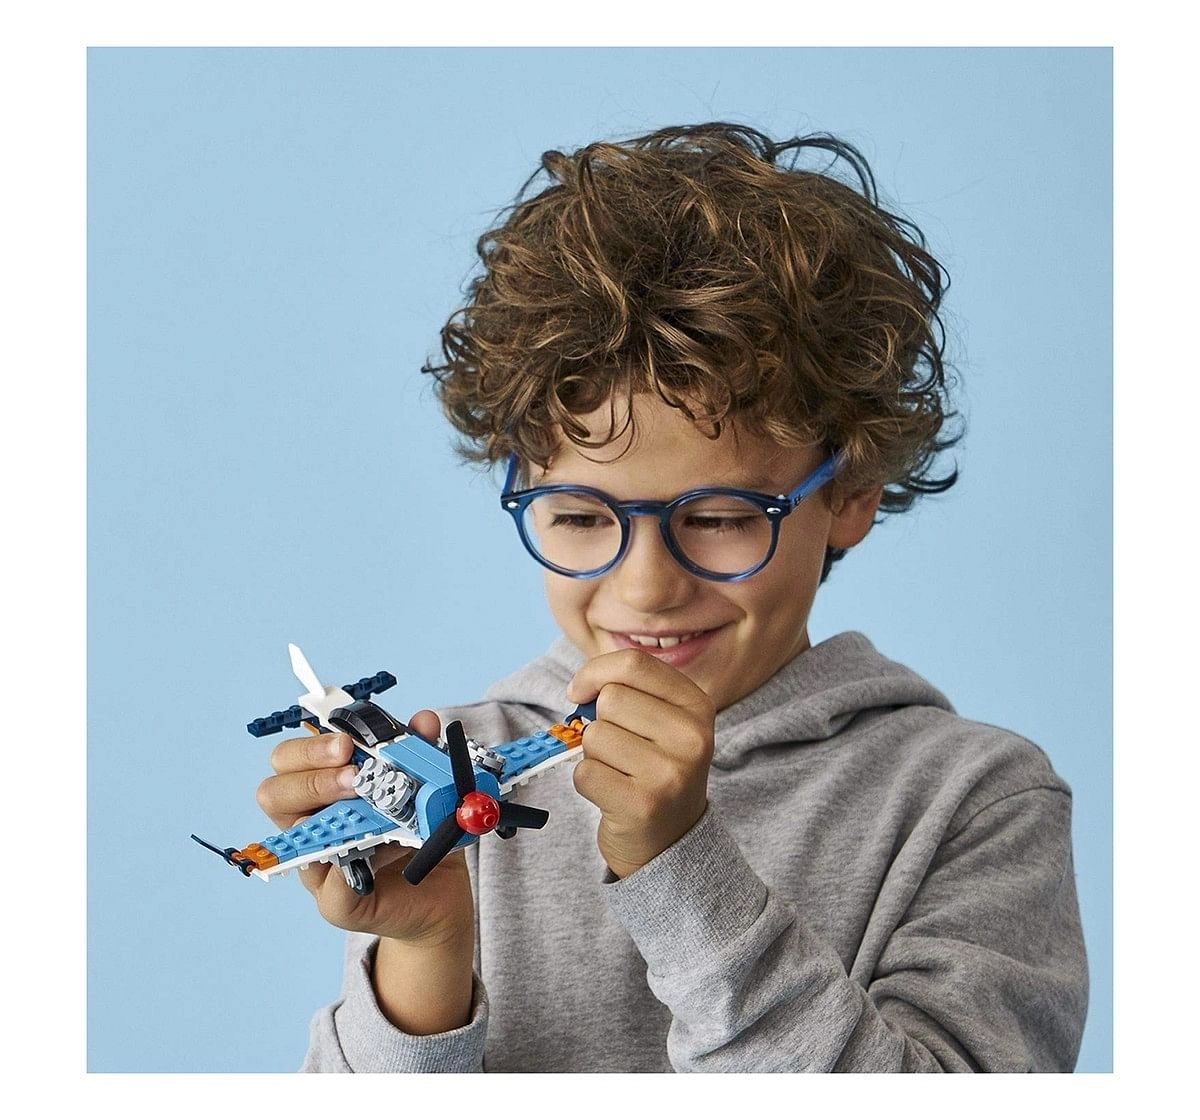 Lego 31099 Propeller Plane Blocks for Kids age 6Y+ 